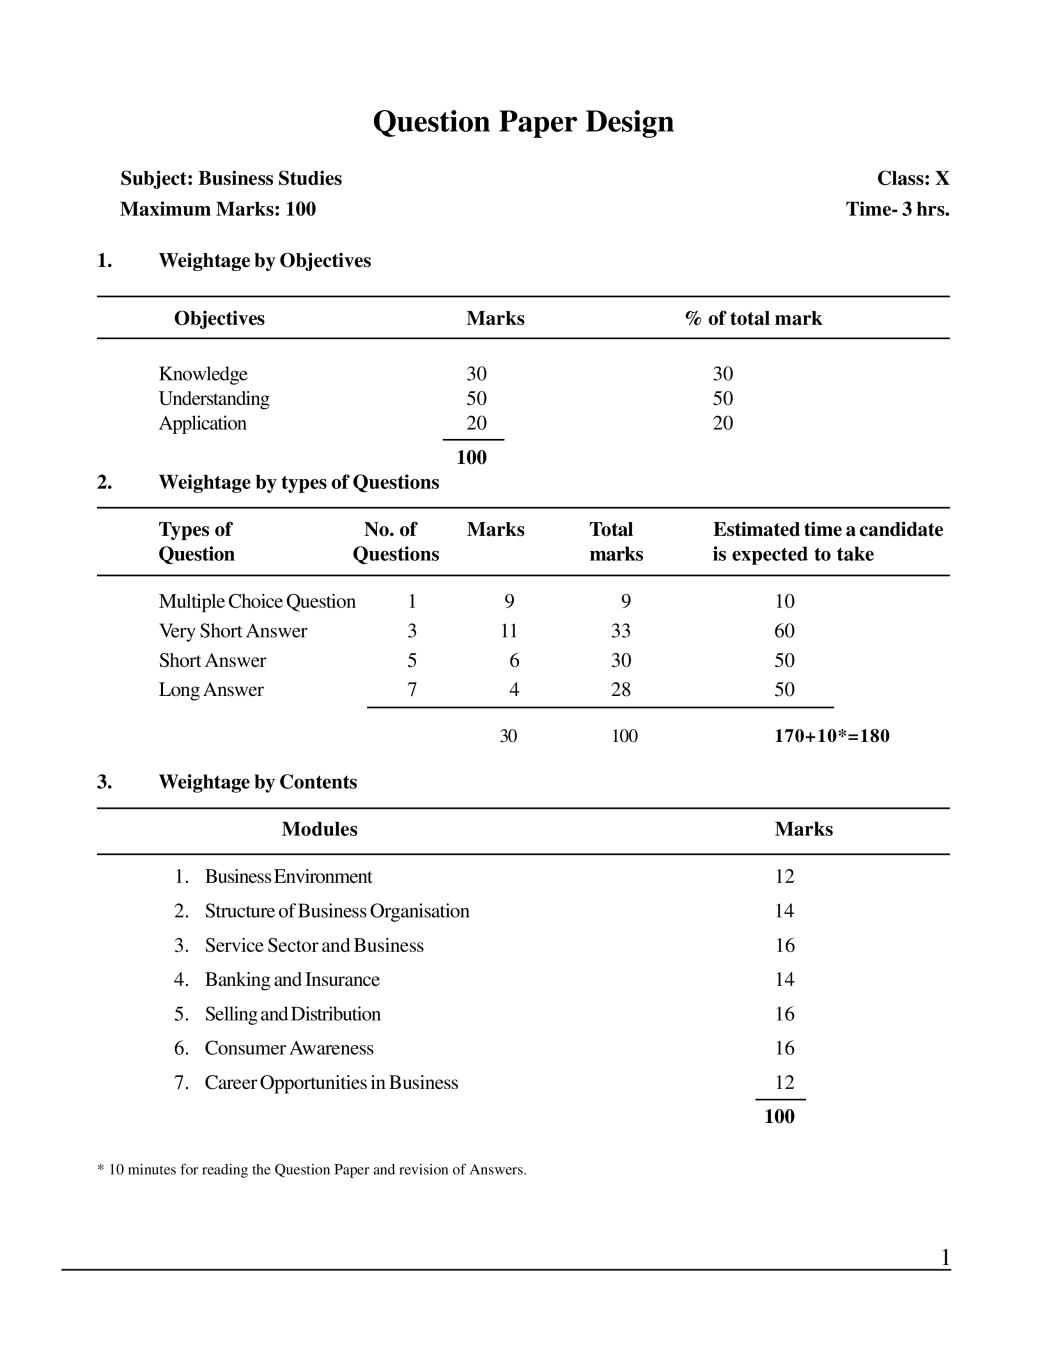 NIOS Class 10 Sample Paper 2020 - Business Studies - Page 1